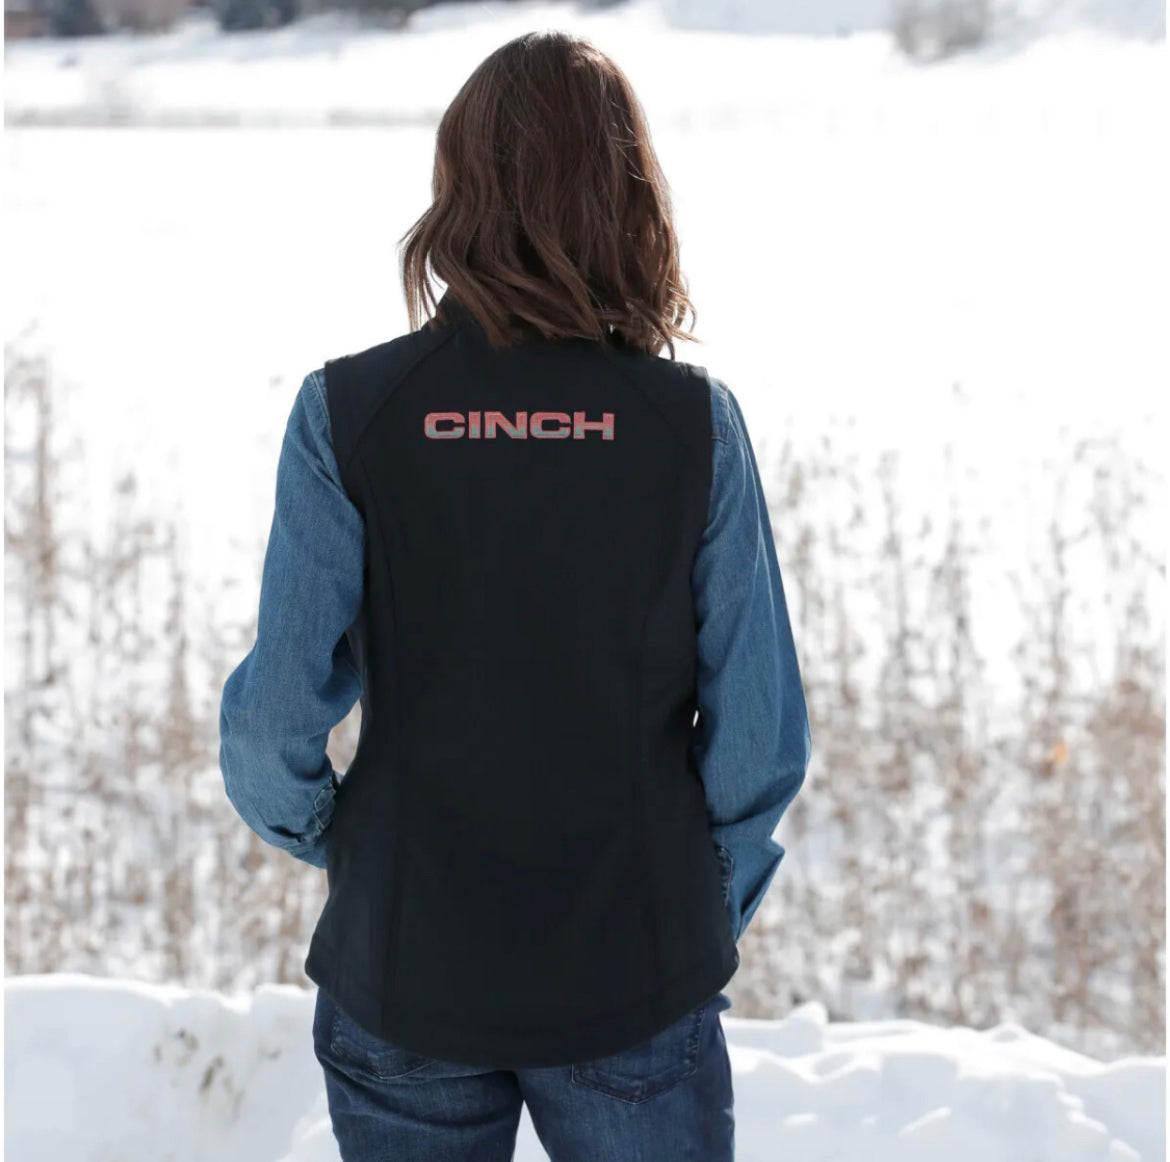 Cinch Women’s Black Bonded Vest